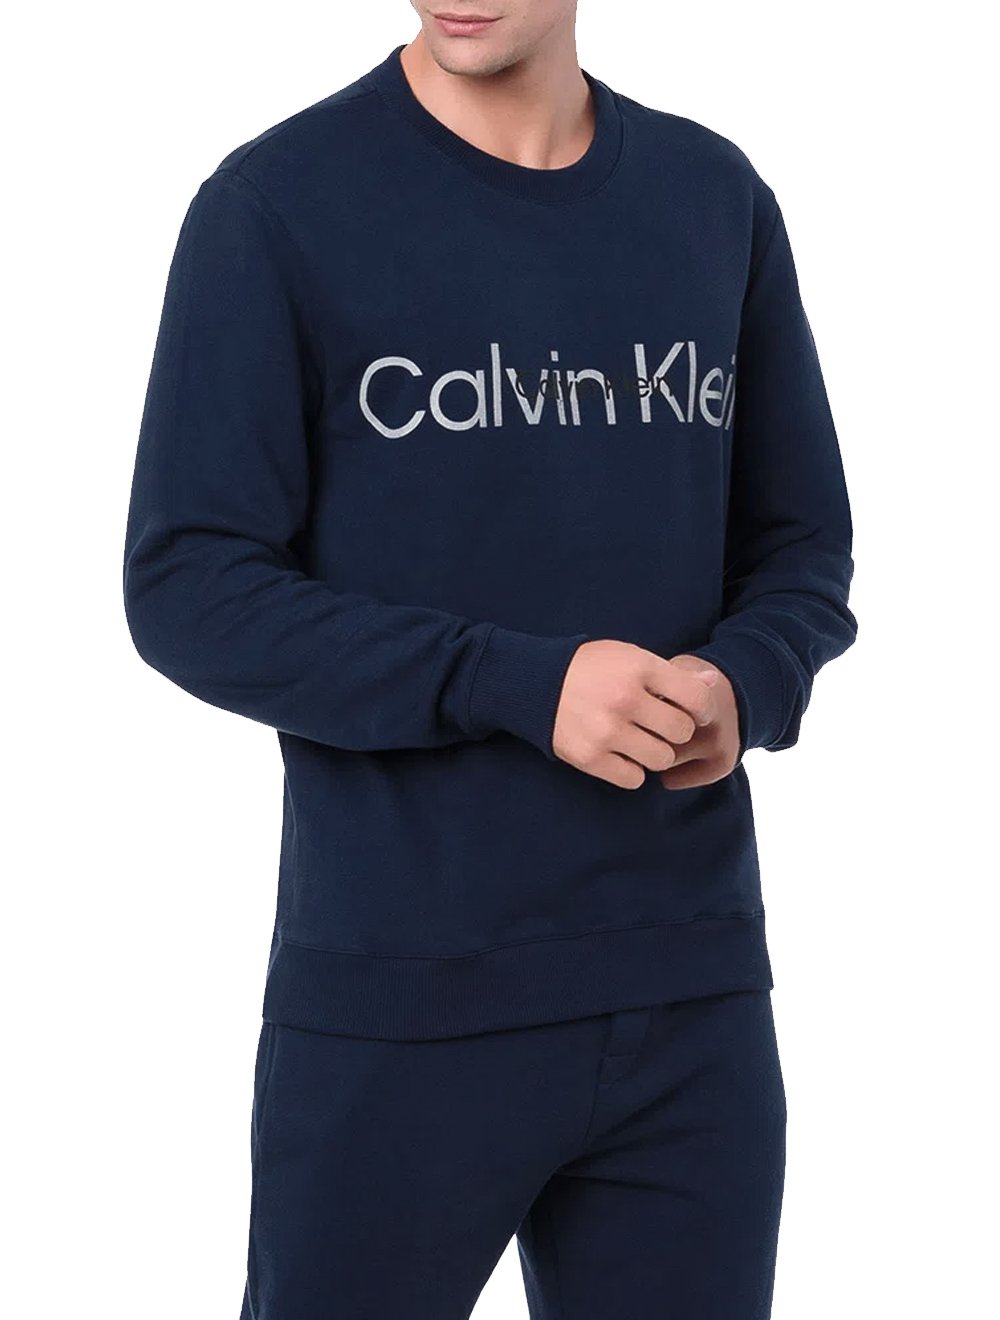 Moletom Calvin Klein Loungewear Masculino Crewneck Duo Logo Azul Marinho